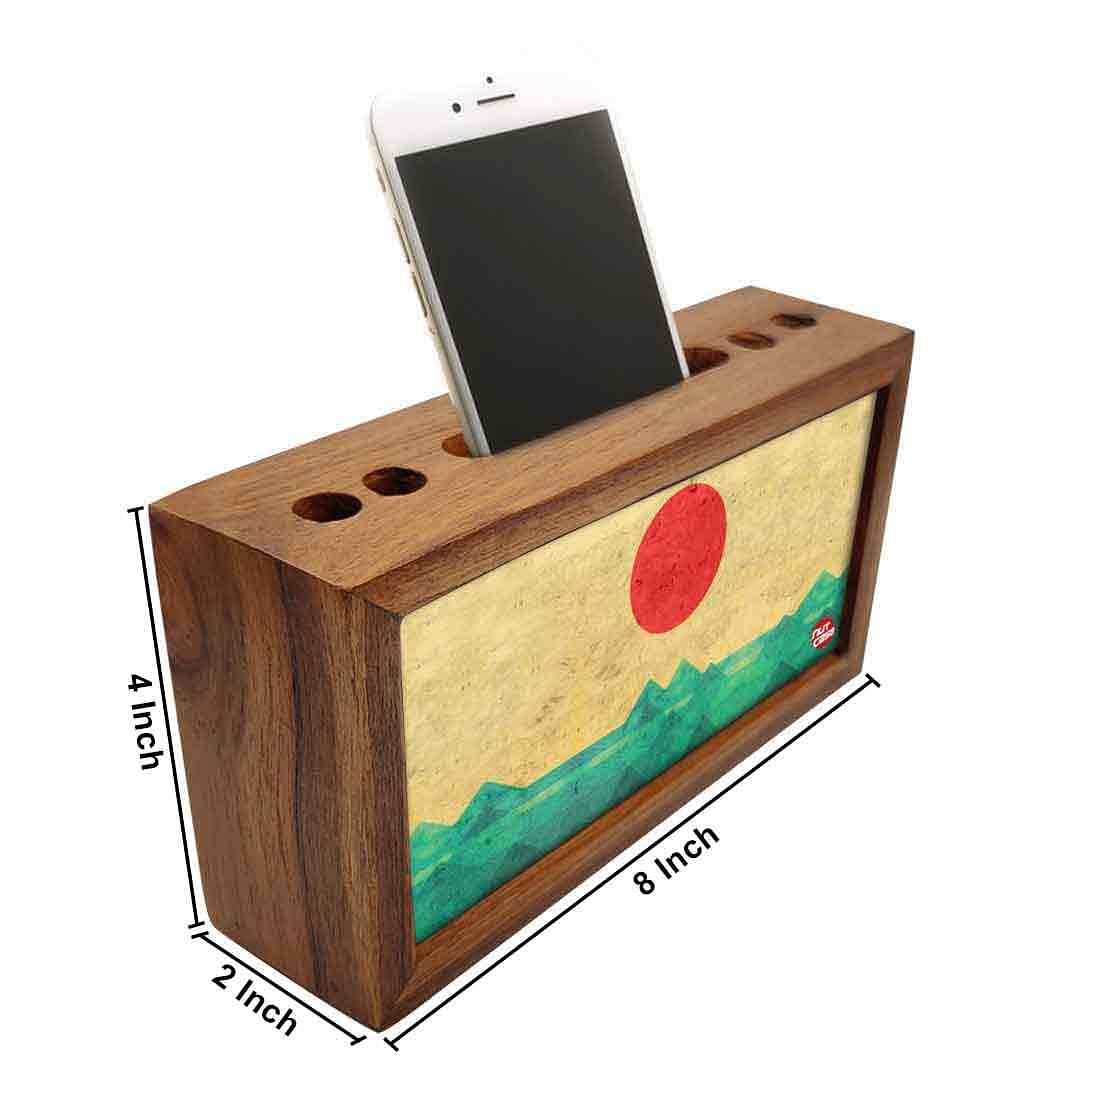 Wooden desk organizer Pen Mobile Stand - Rising Sun Nutcase